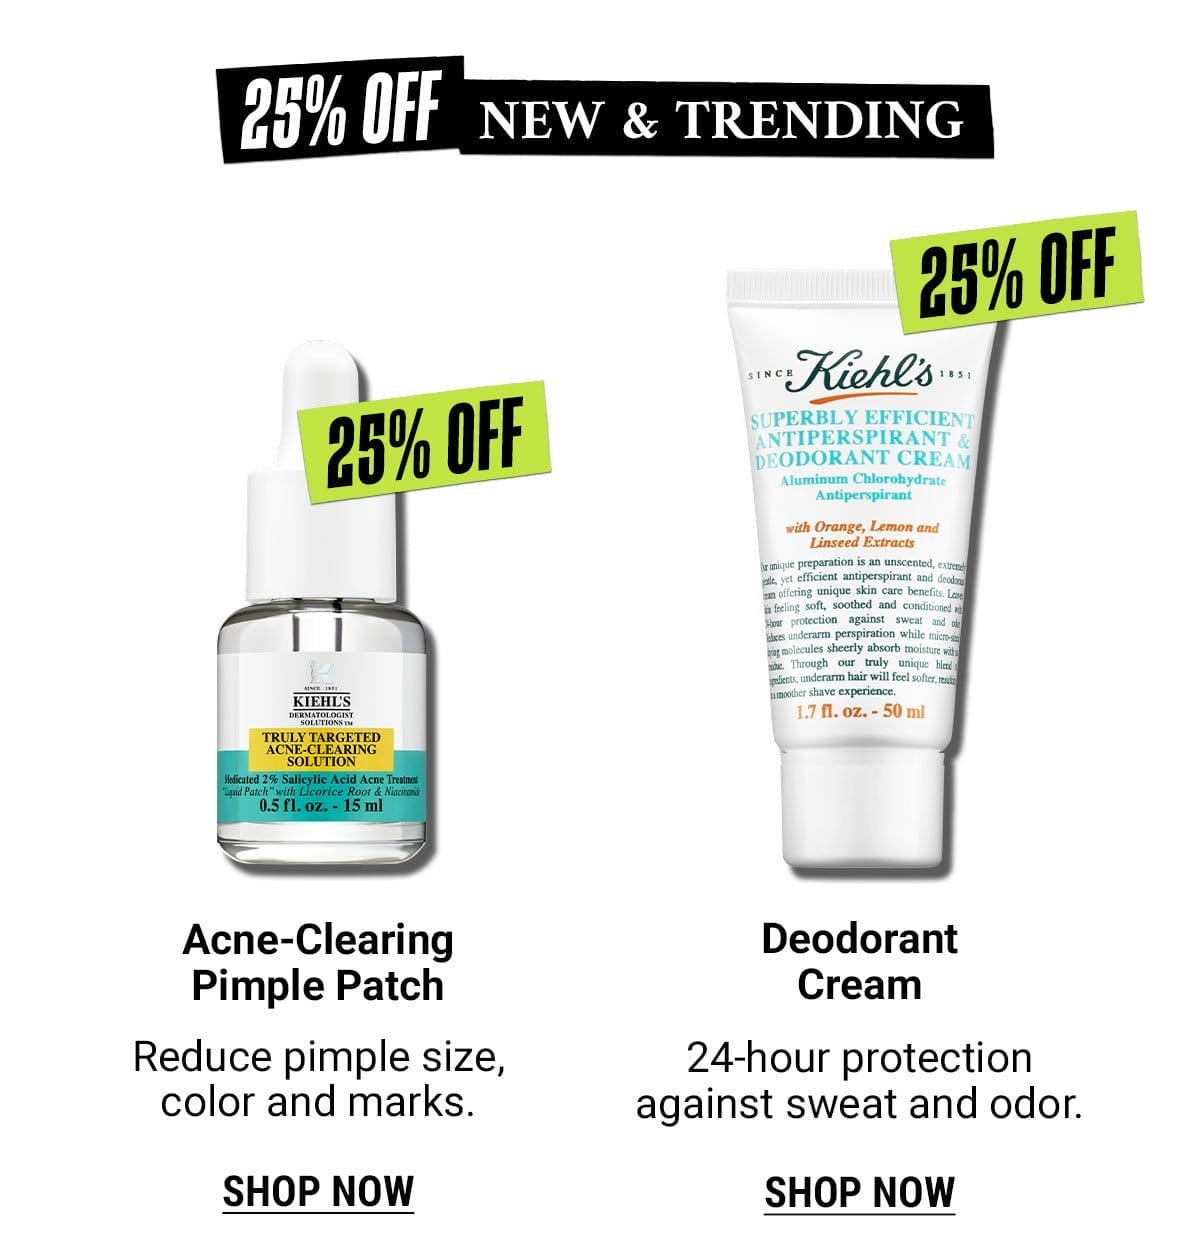 Acne-Clearing Pimple Patch, Deodorant Cream